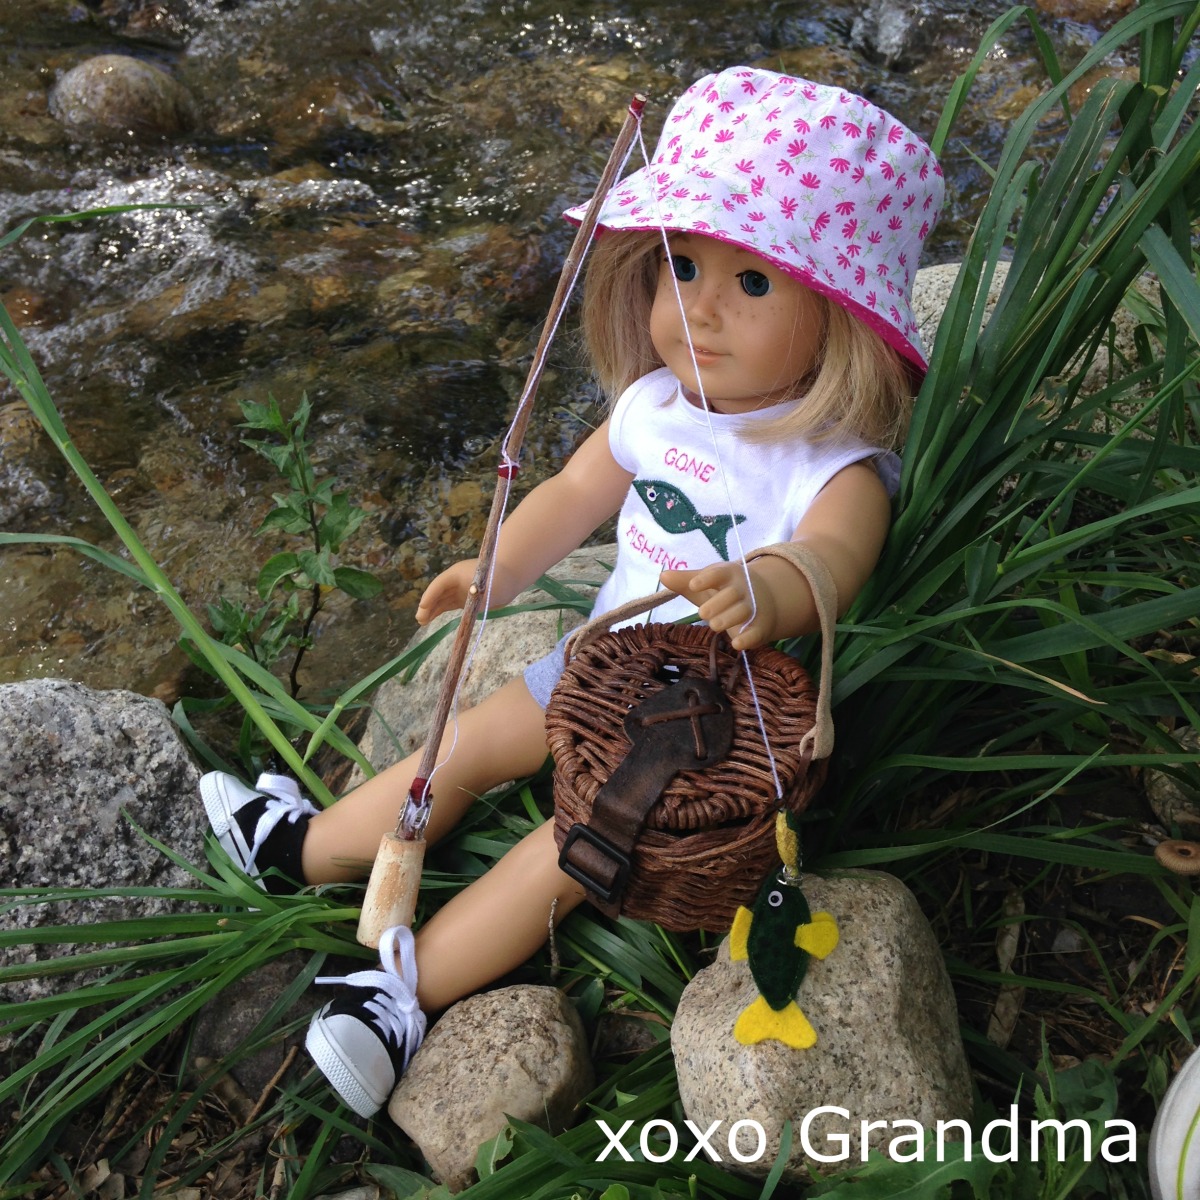 xoxo Grandma: Gone Fishing Outfit & Accessories - American Girl